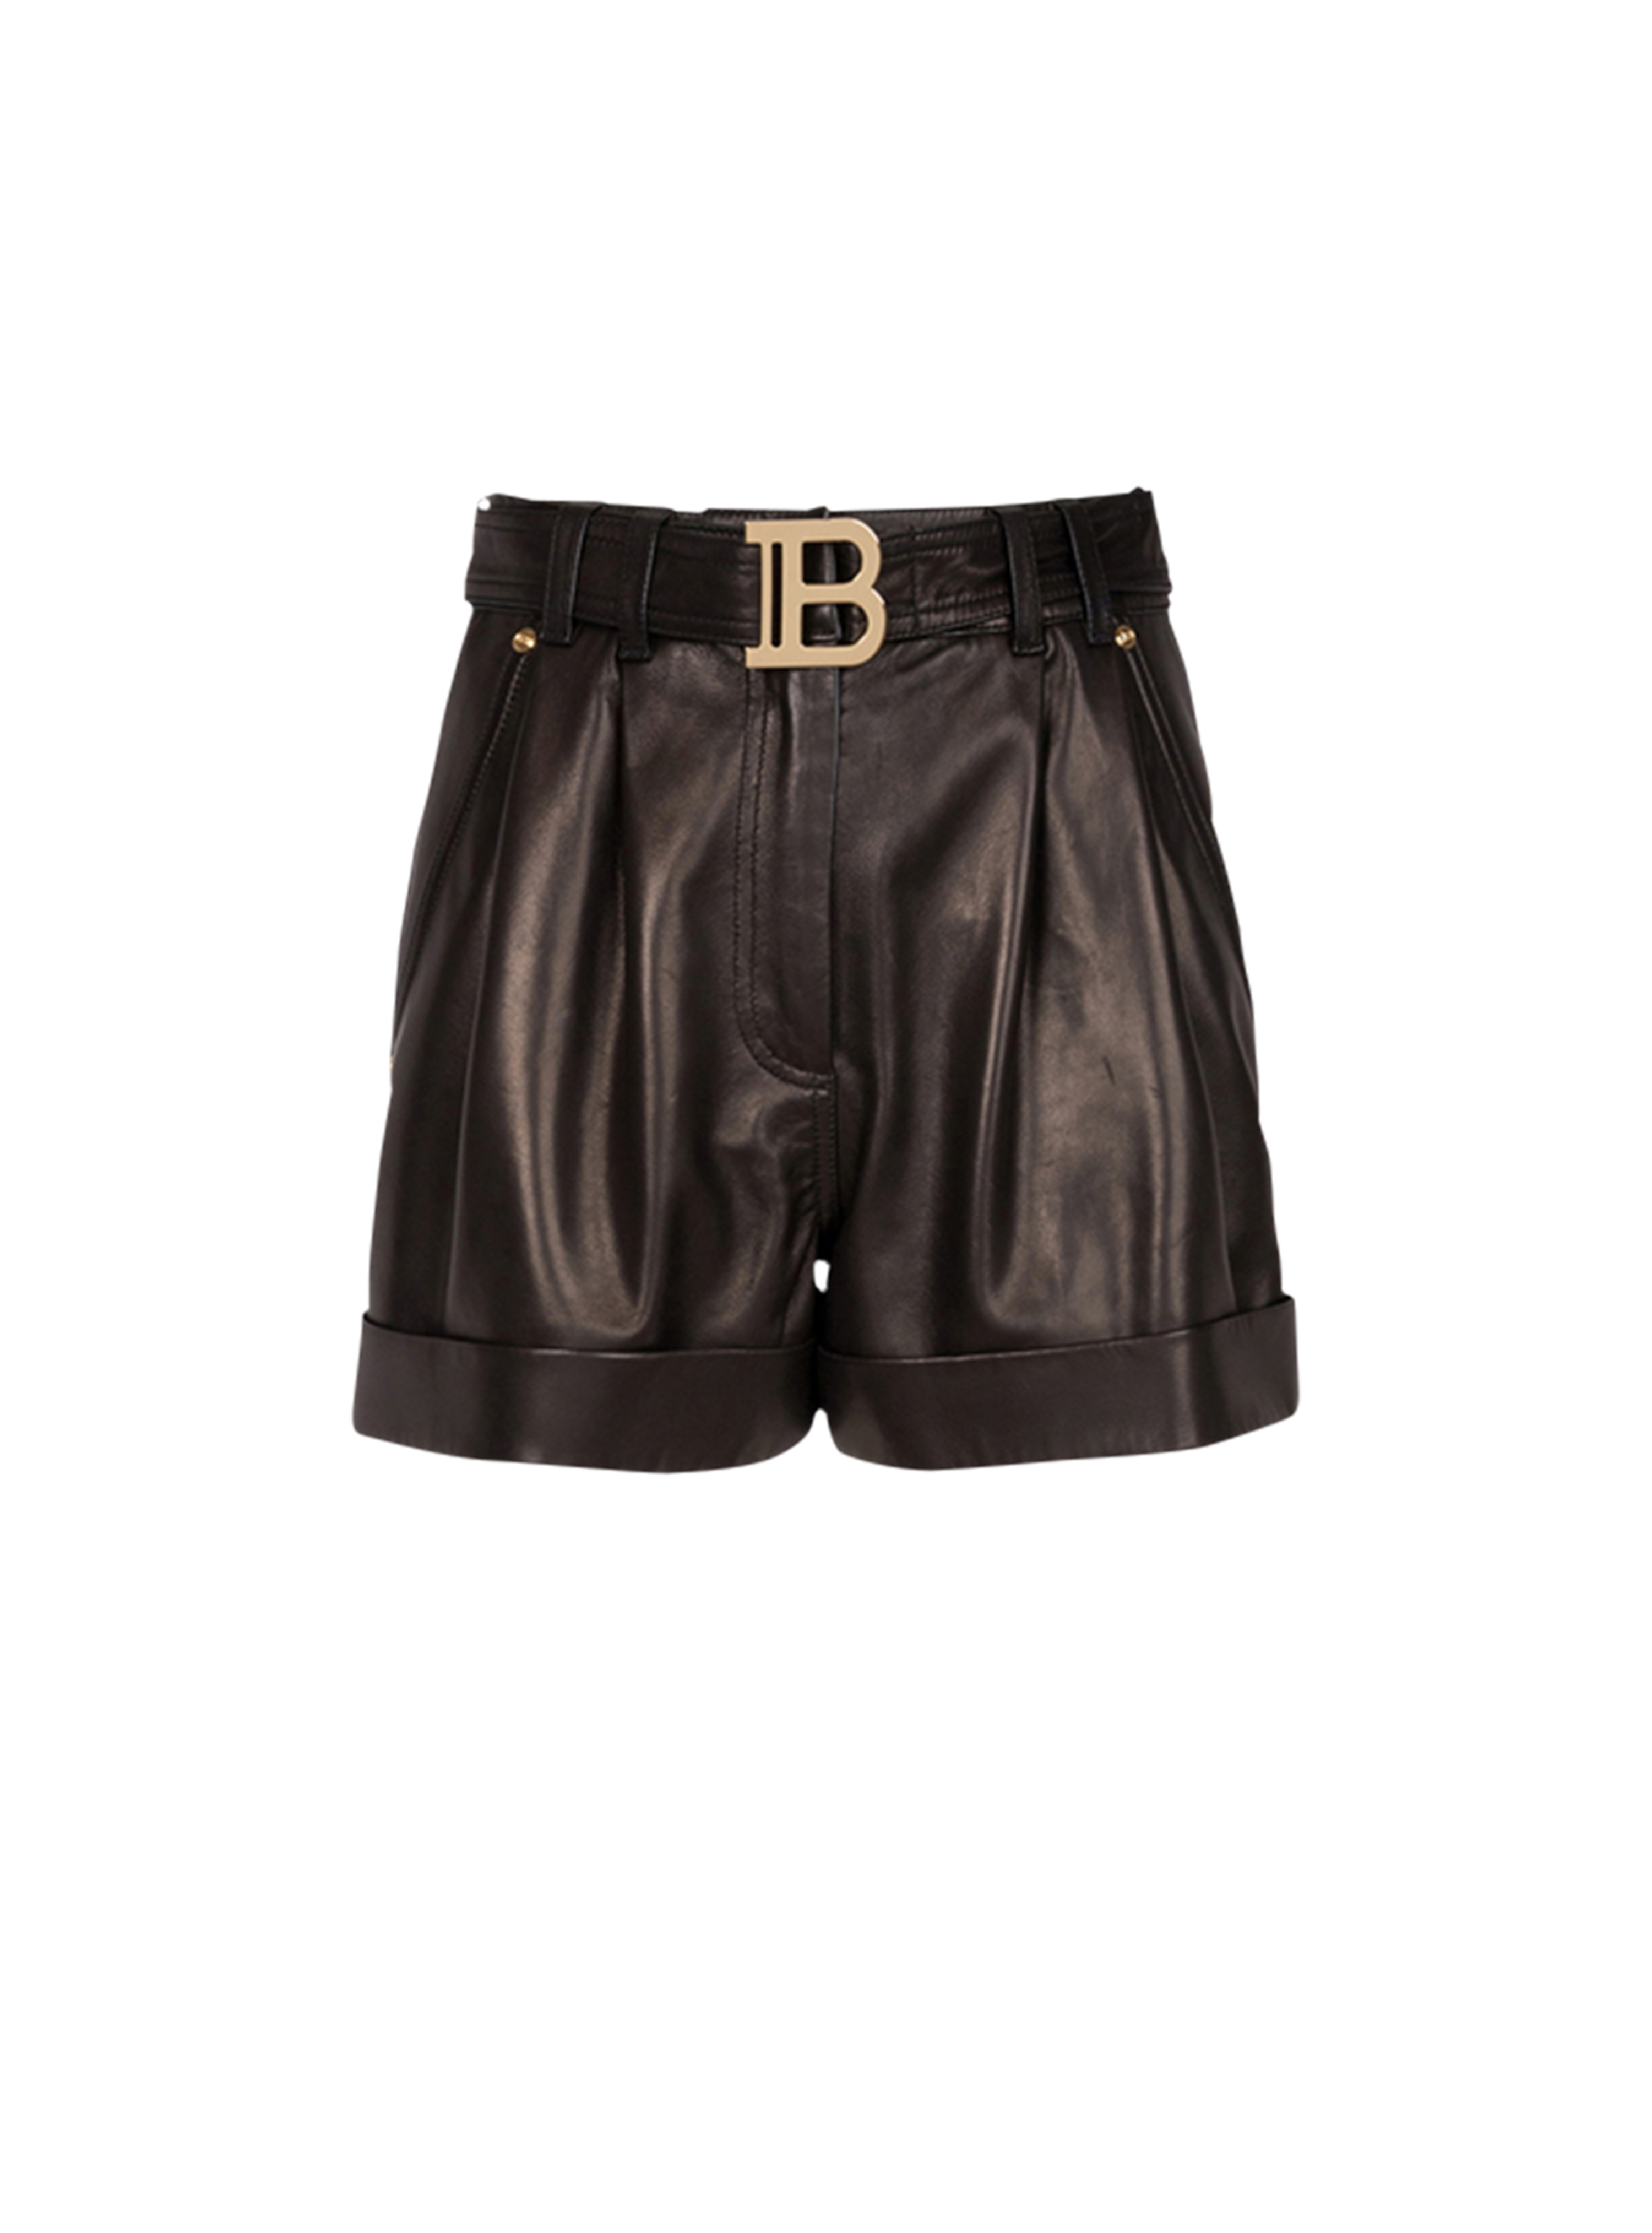 High-waisted leather shorts with Balmain buckle, black